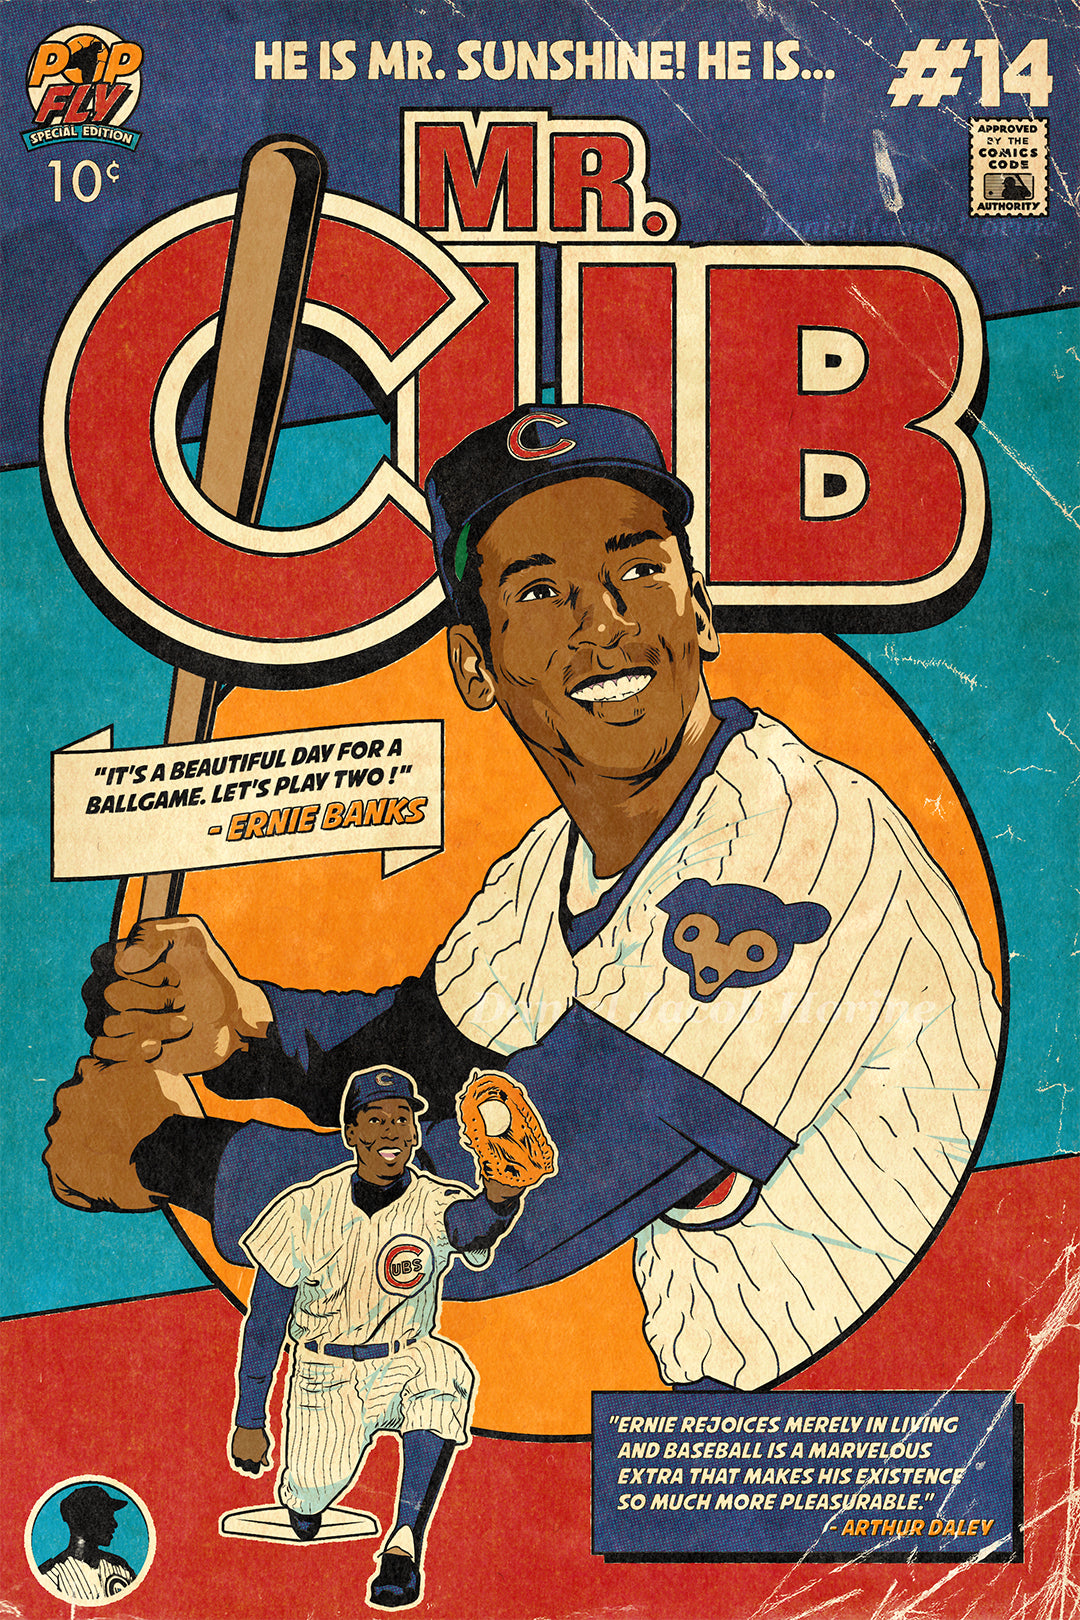 16. (SOLD OUT) Mr. Cub Ernie Banks 7 x 10.5 Art Print